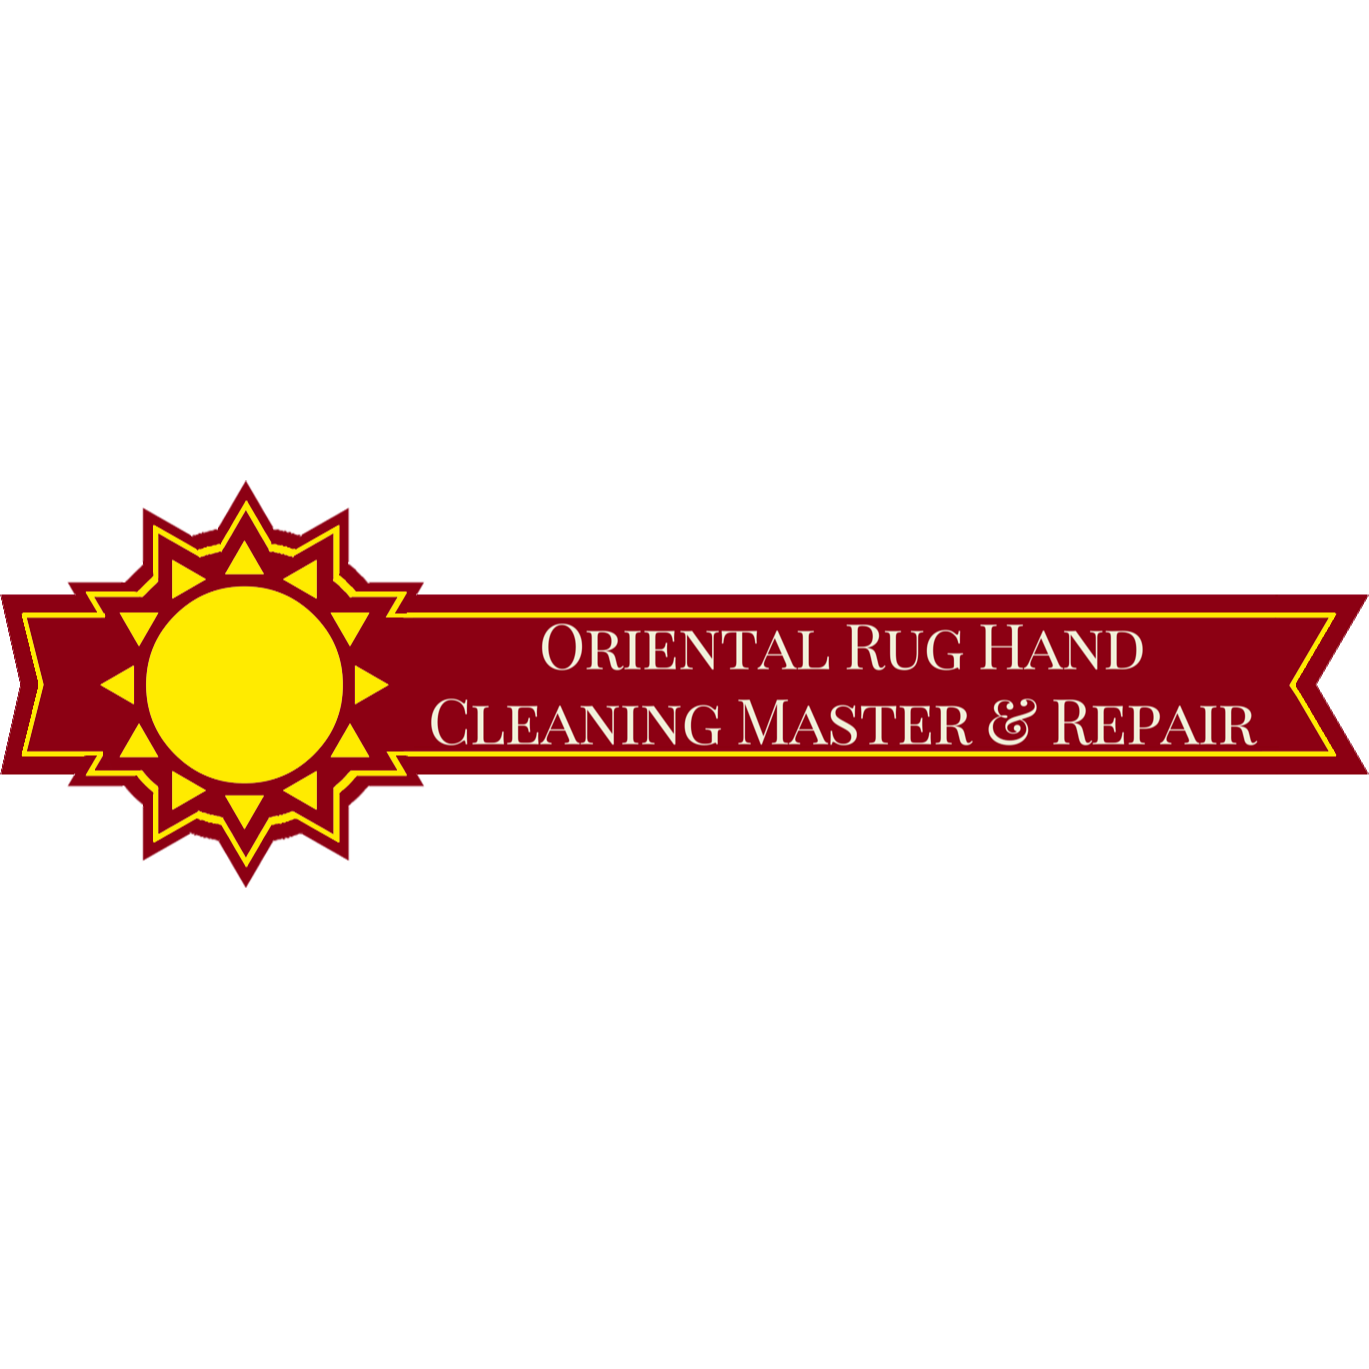 Oriental Rug Hand Cleaning Master & Repair - Oriental Rug Cleaning Restoration Service Orlando FL - Orlando, FL - (407)492-8193 | ShowMeLocal.com